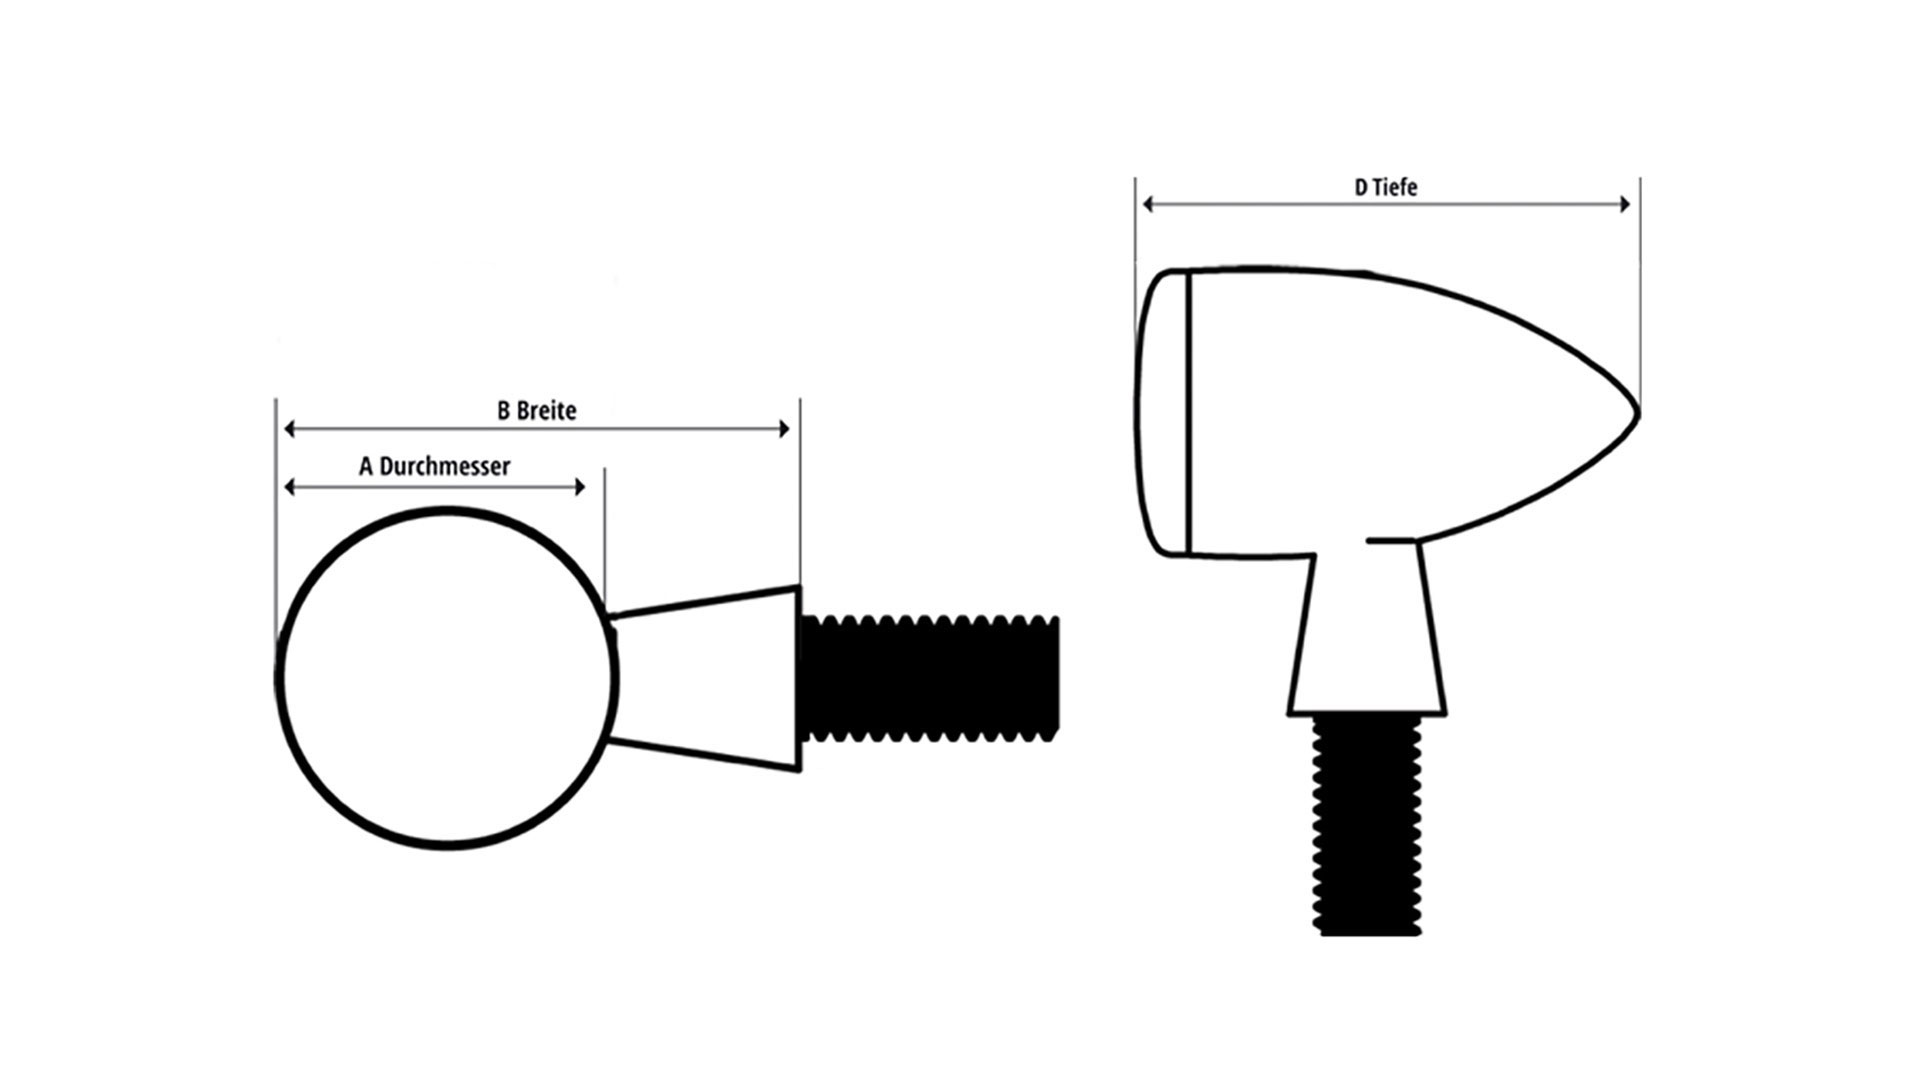 HI-Power LED-Blinker CORTONA, Alu, getöntes Glas, E-geprüft, Paar